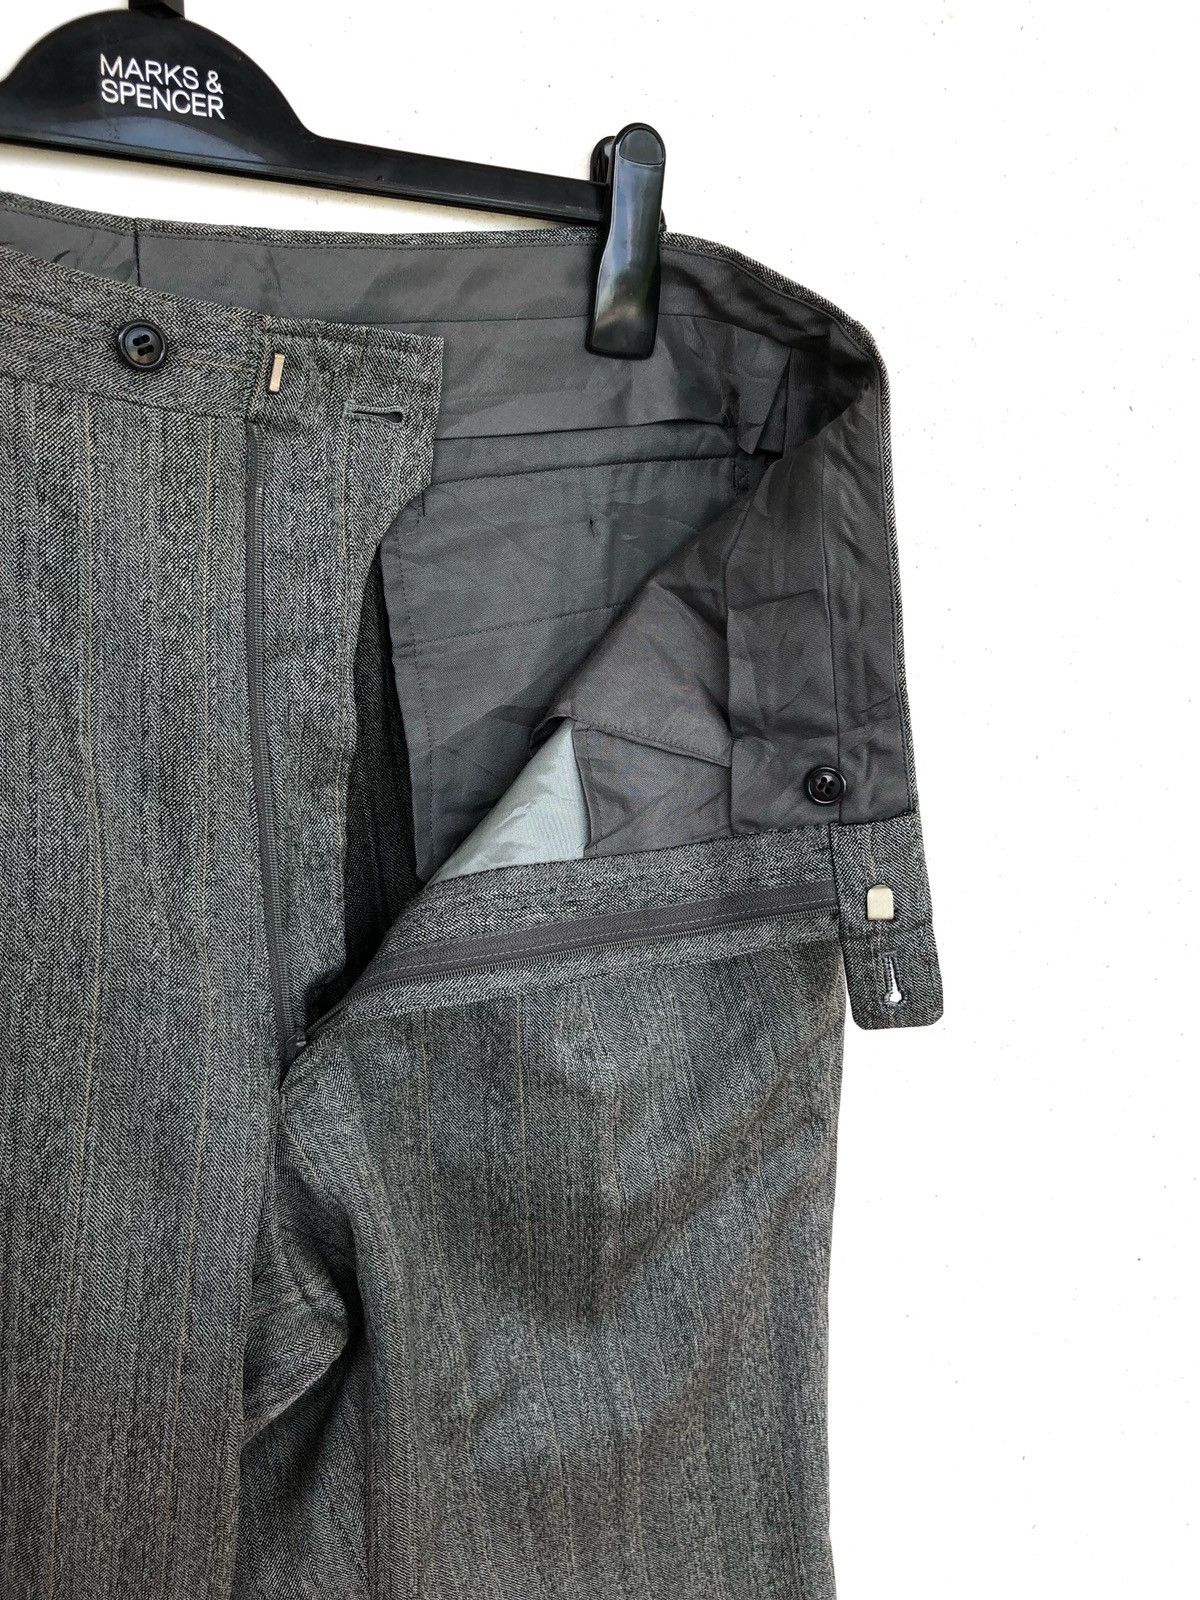 Lanvin GRAIL🔥Lanvin Paris Grey Striped Wool Oversized Baggy Pants Size US 38 / EU 54 - 8 Thumbnail